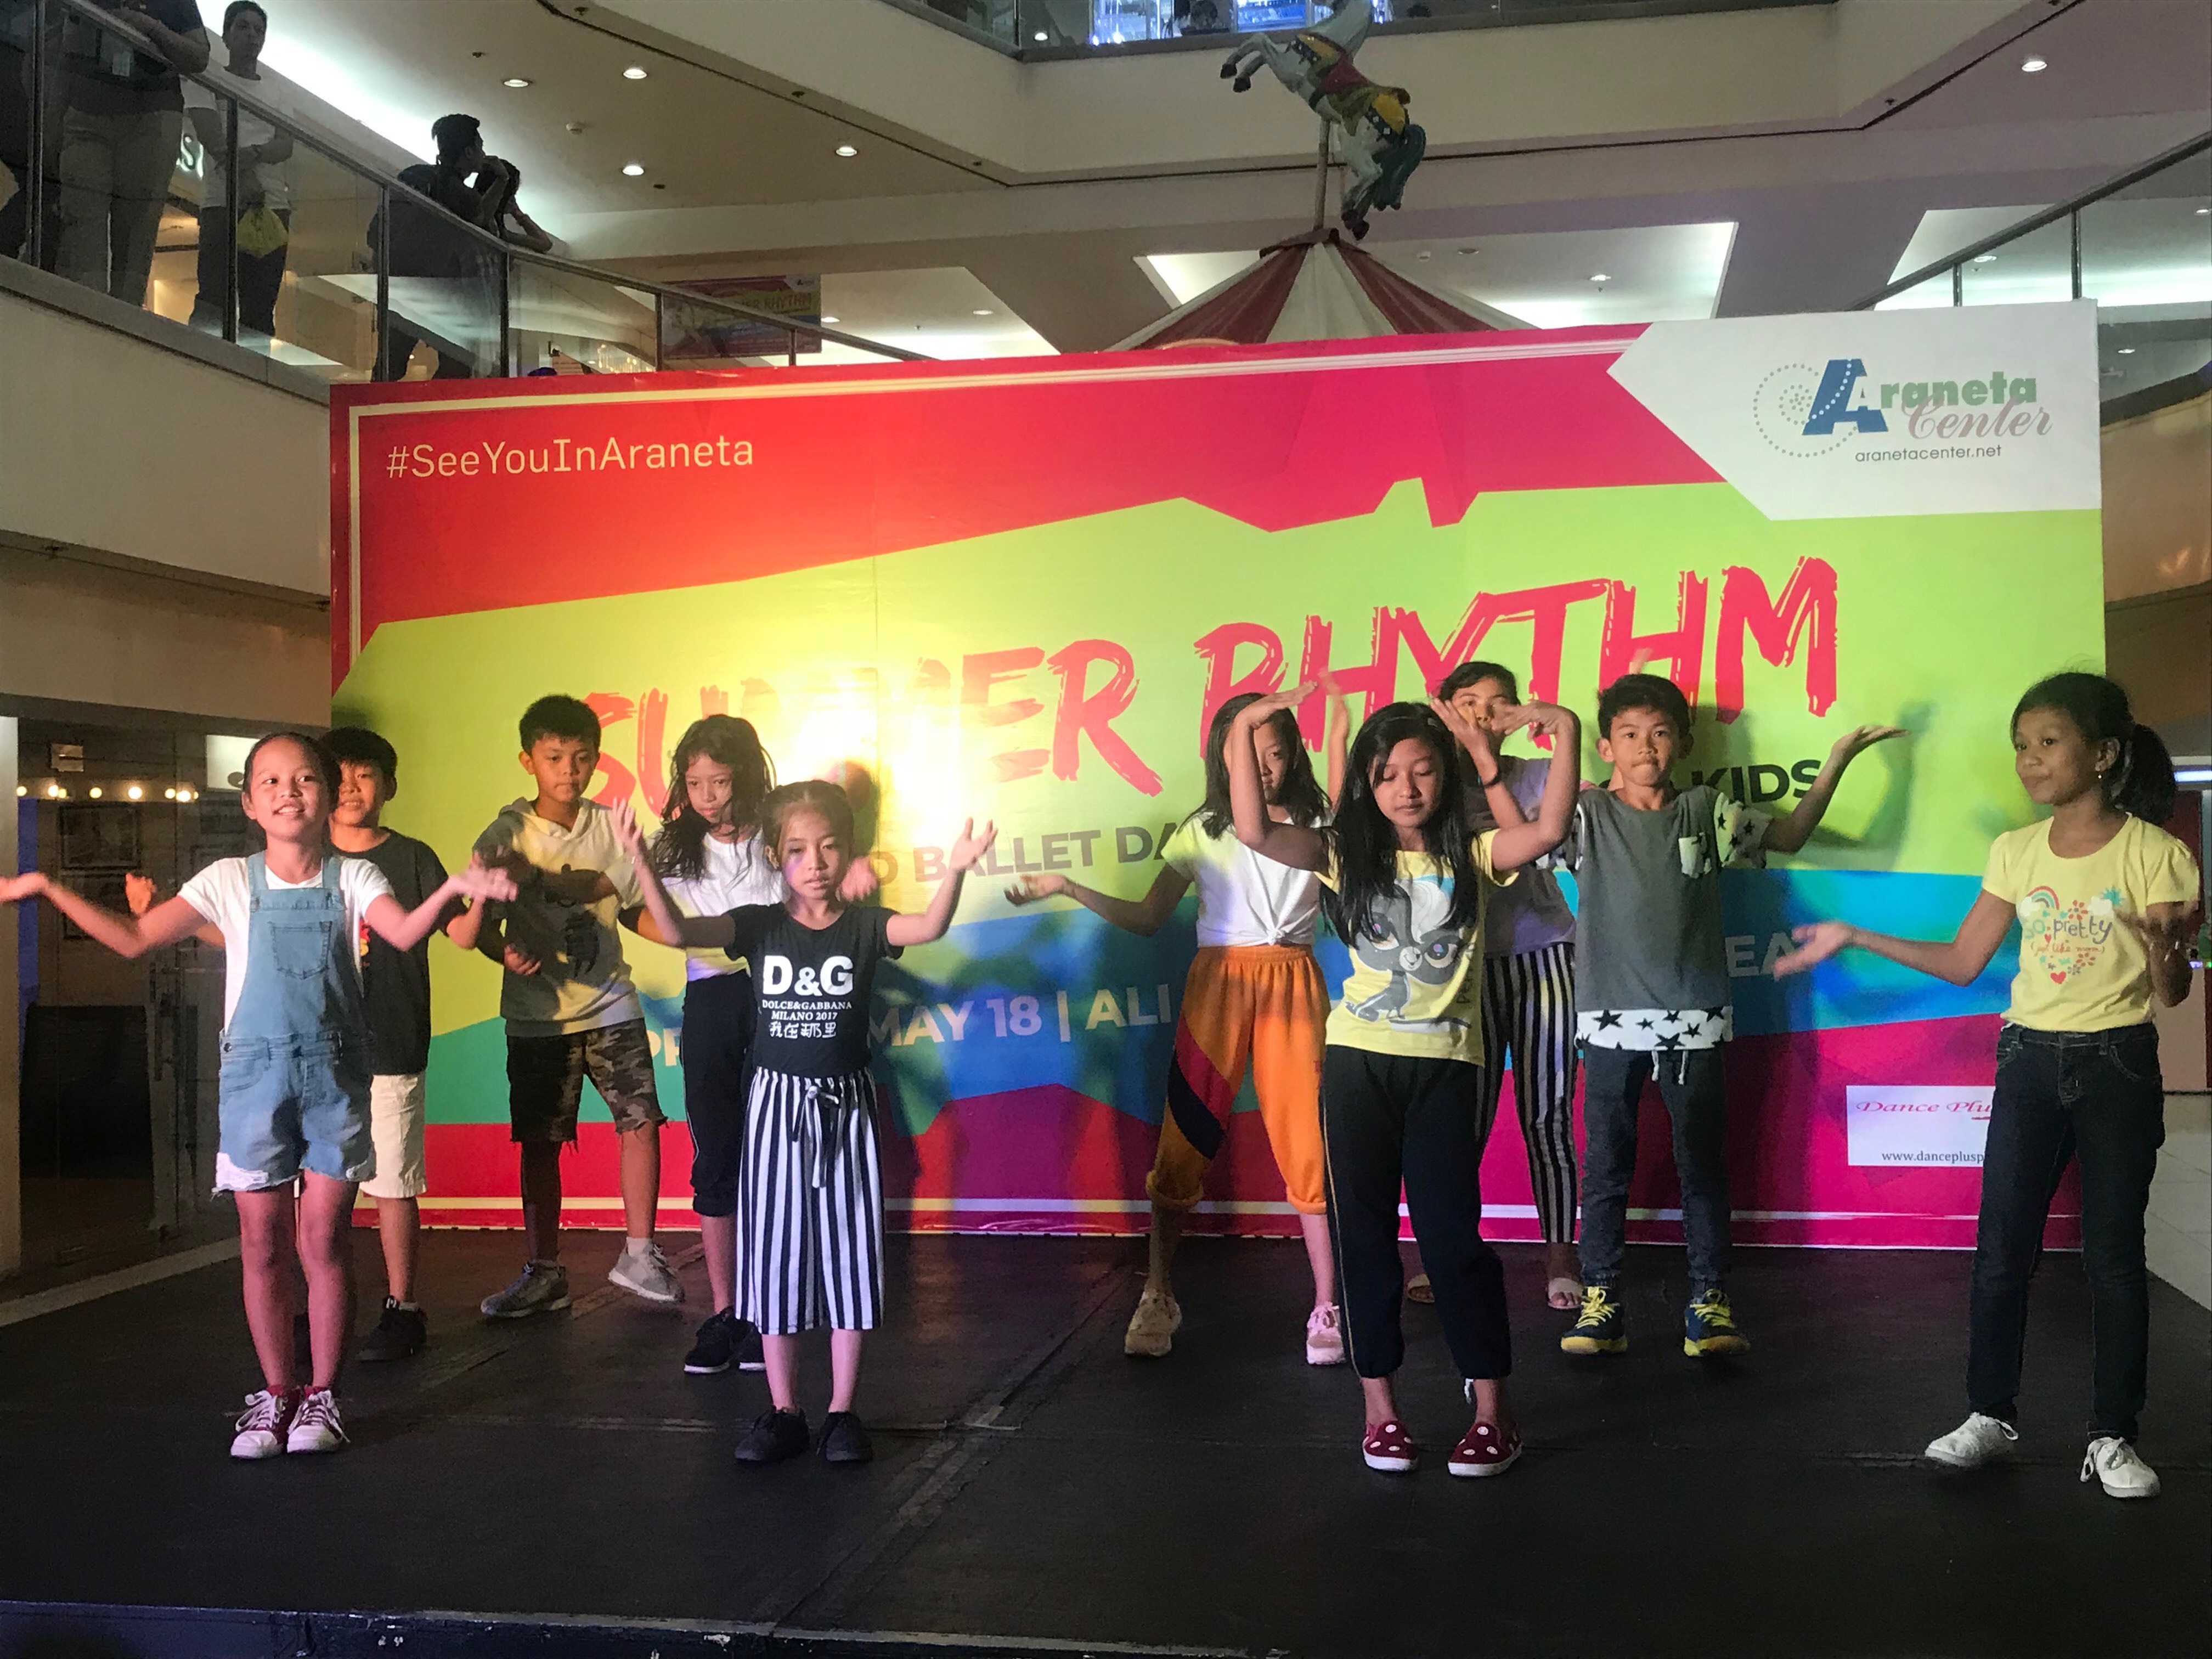 Kids danced to Summer Rhythm at the Araneta Center